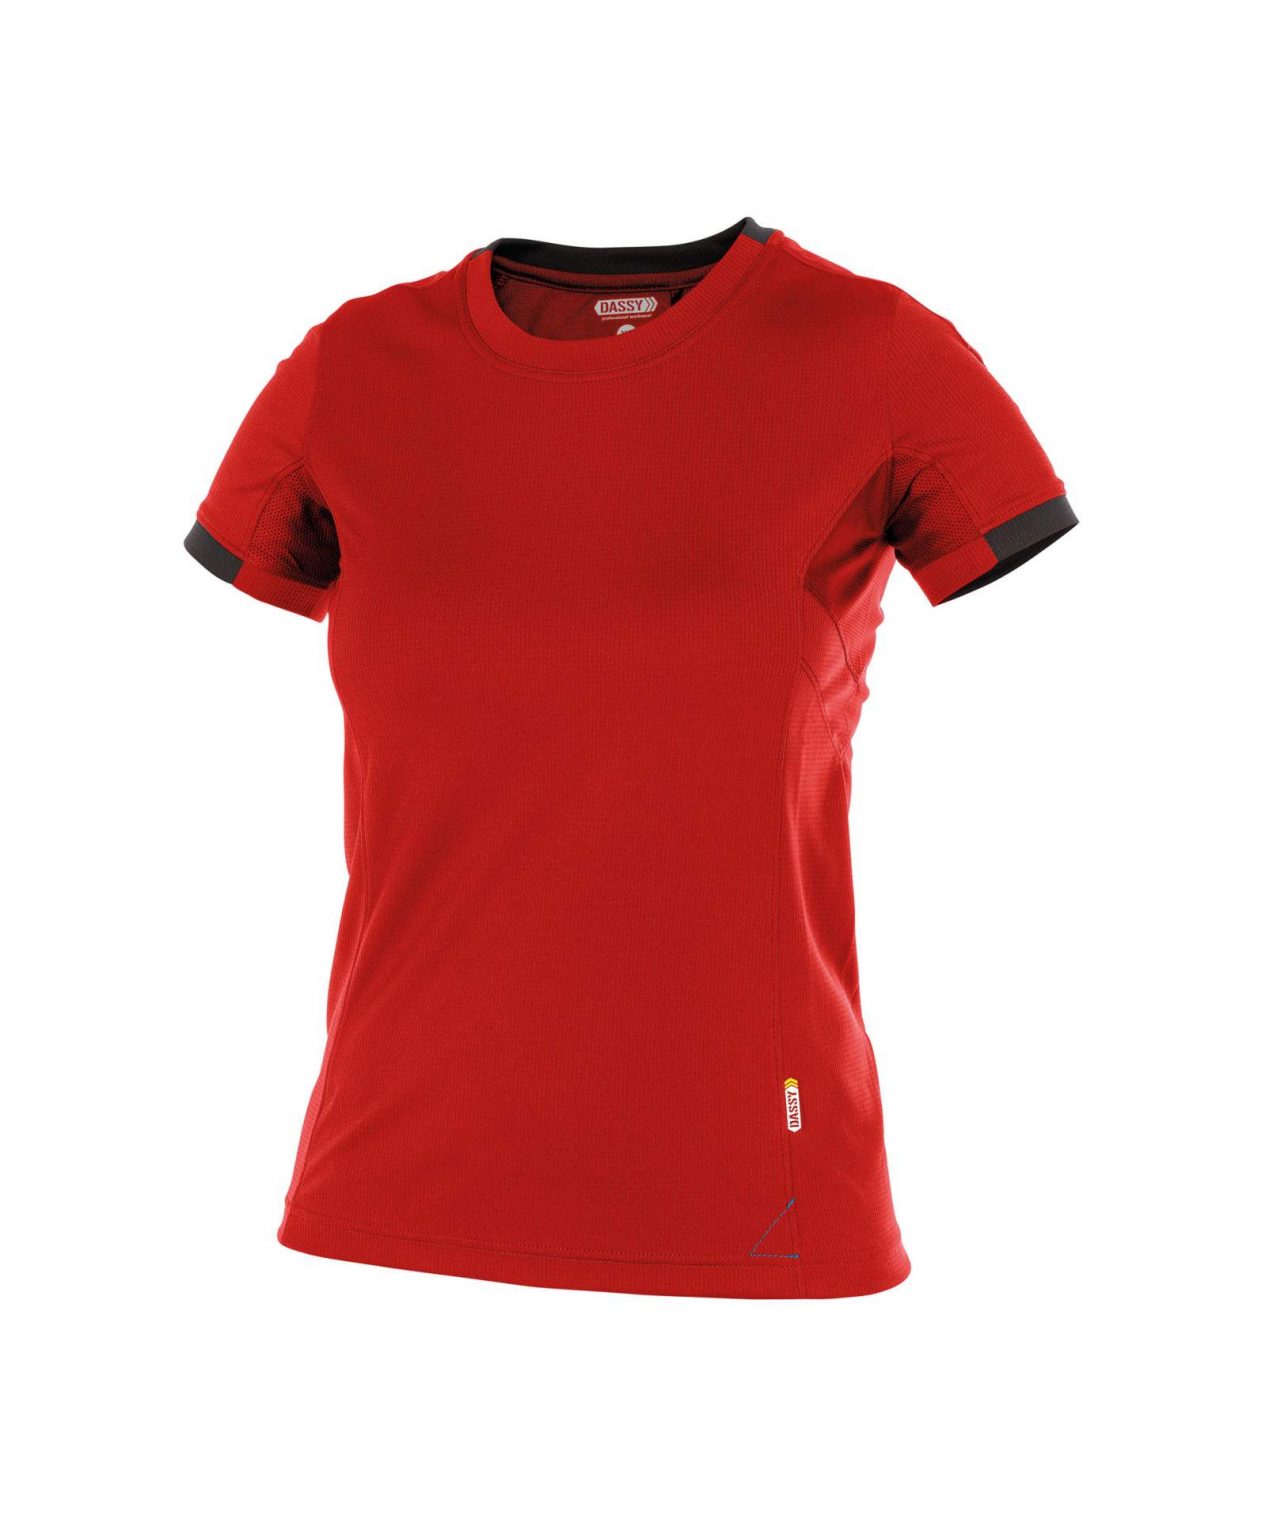 nexus women t shirt red black front